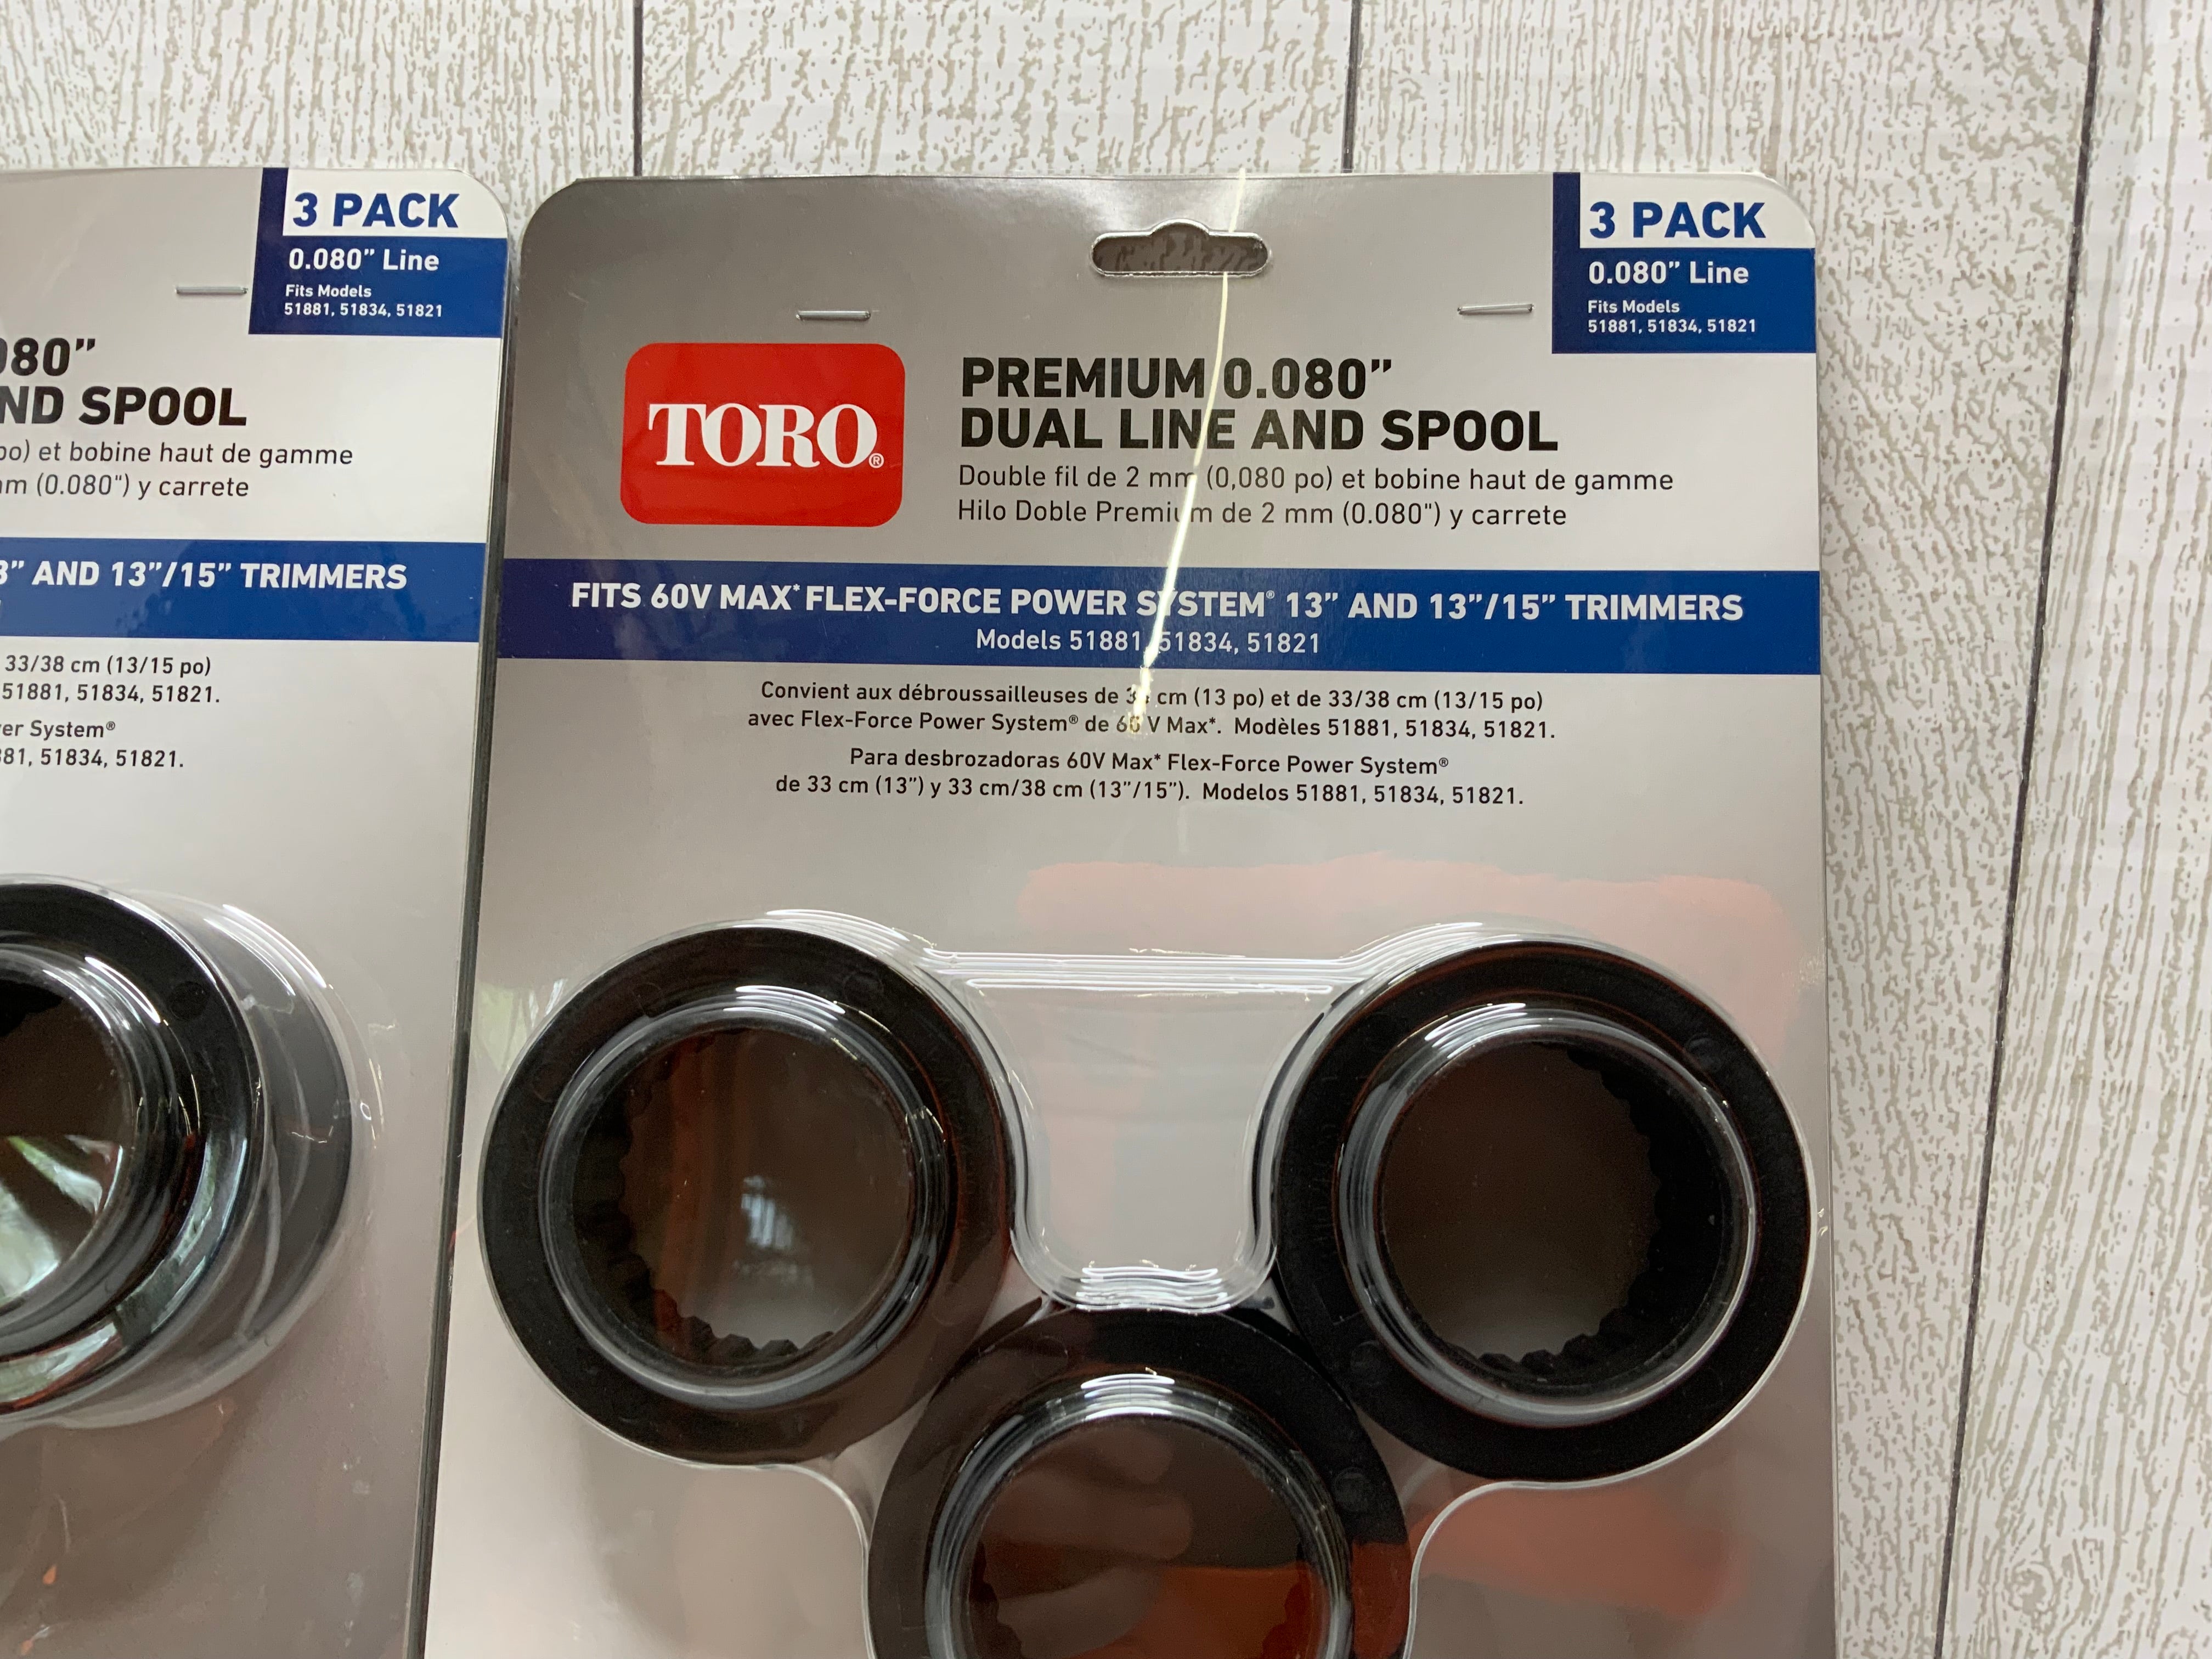 Toro premium 0.080 dual line and spool 88616 **LOT OF 3** (8042923622638)